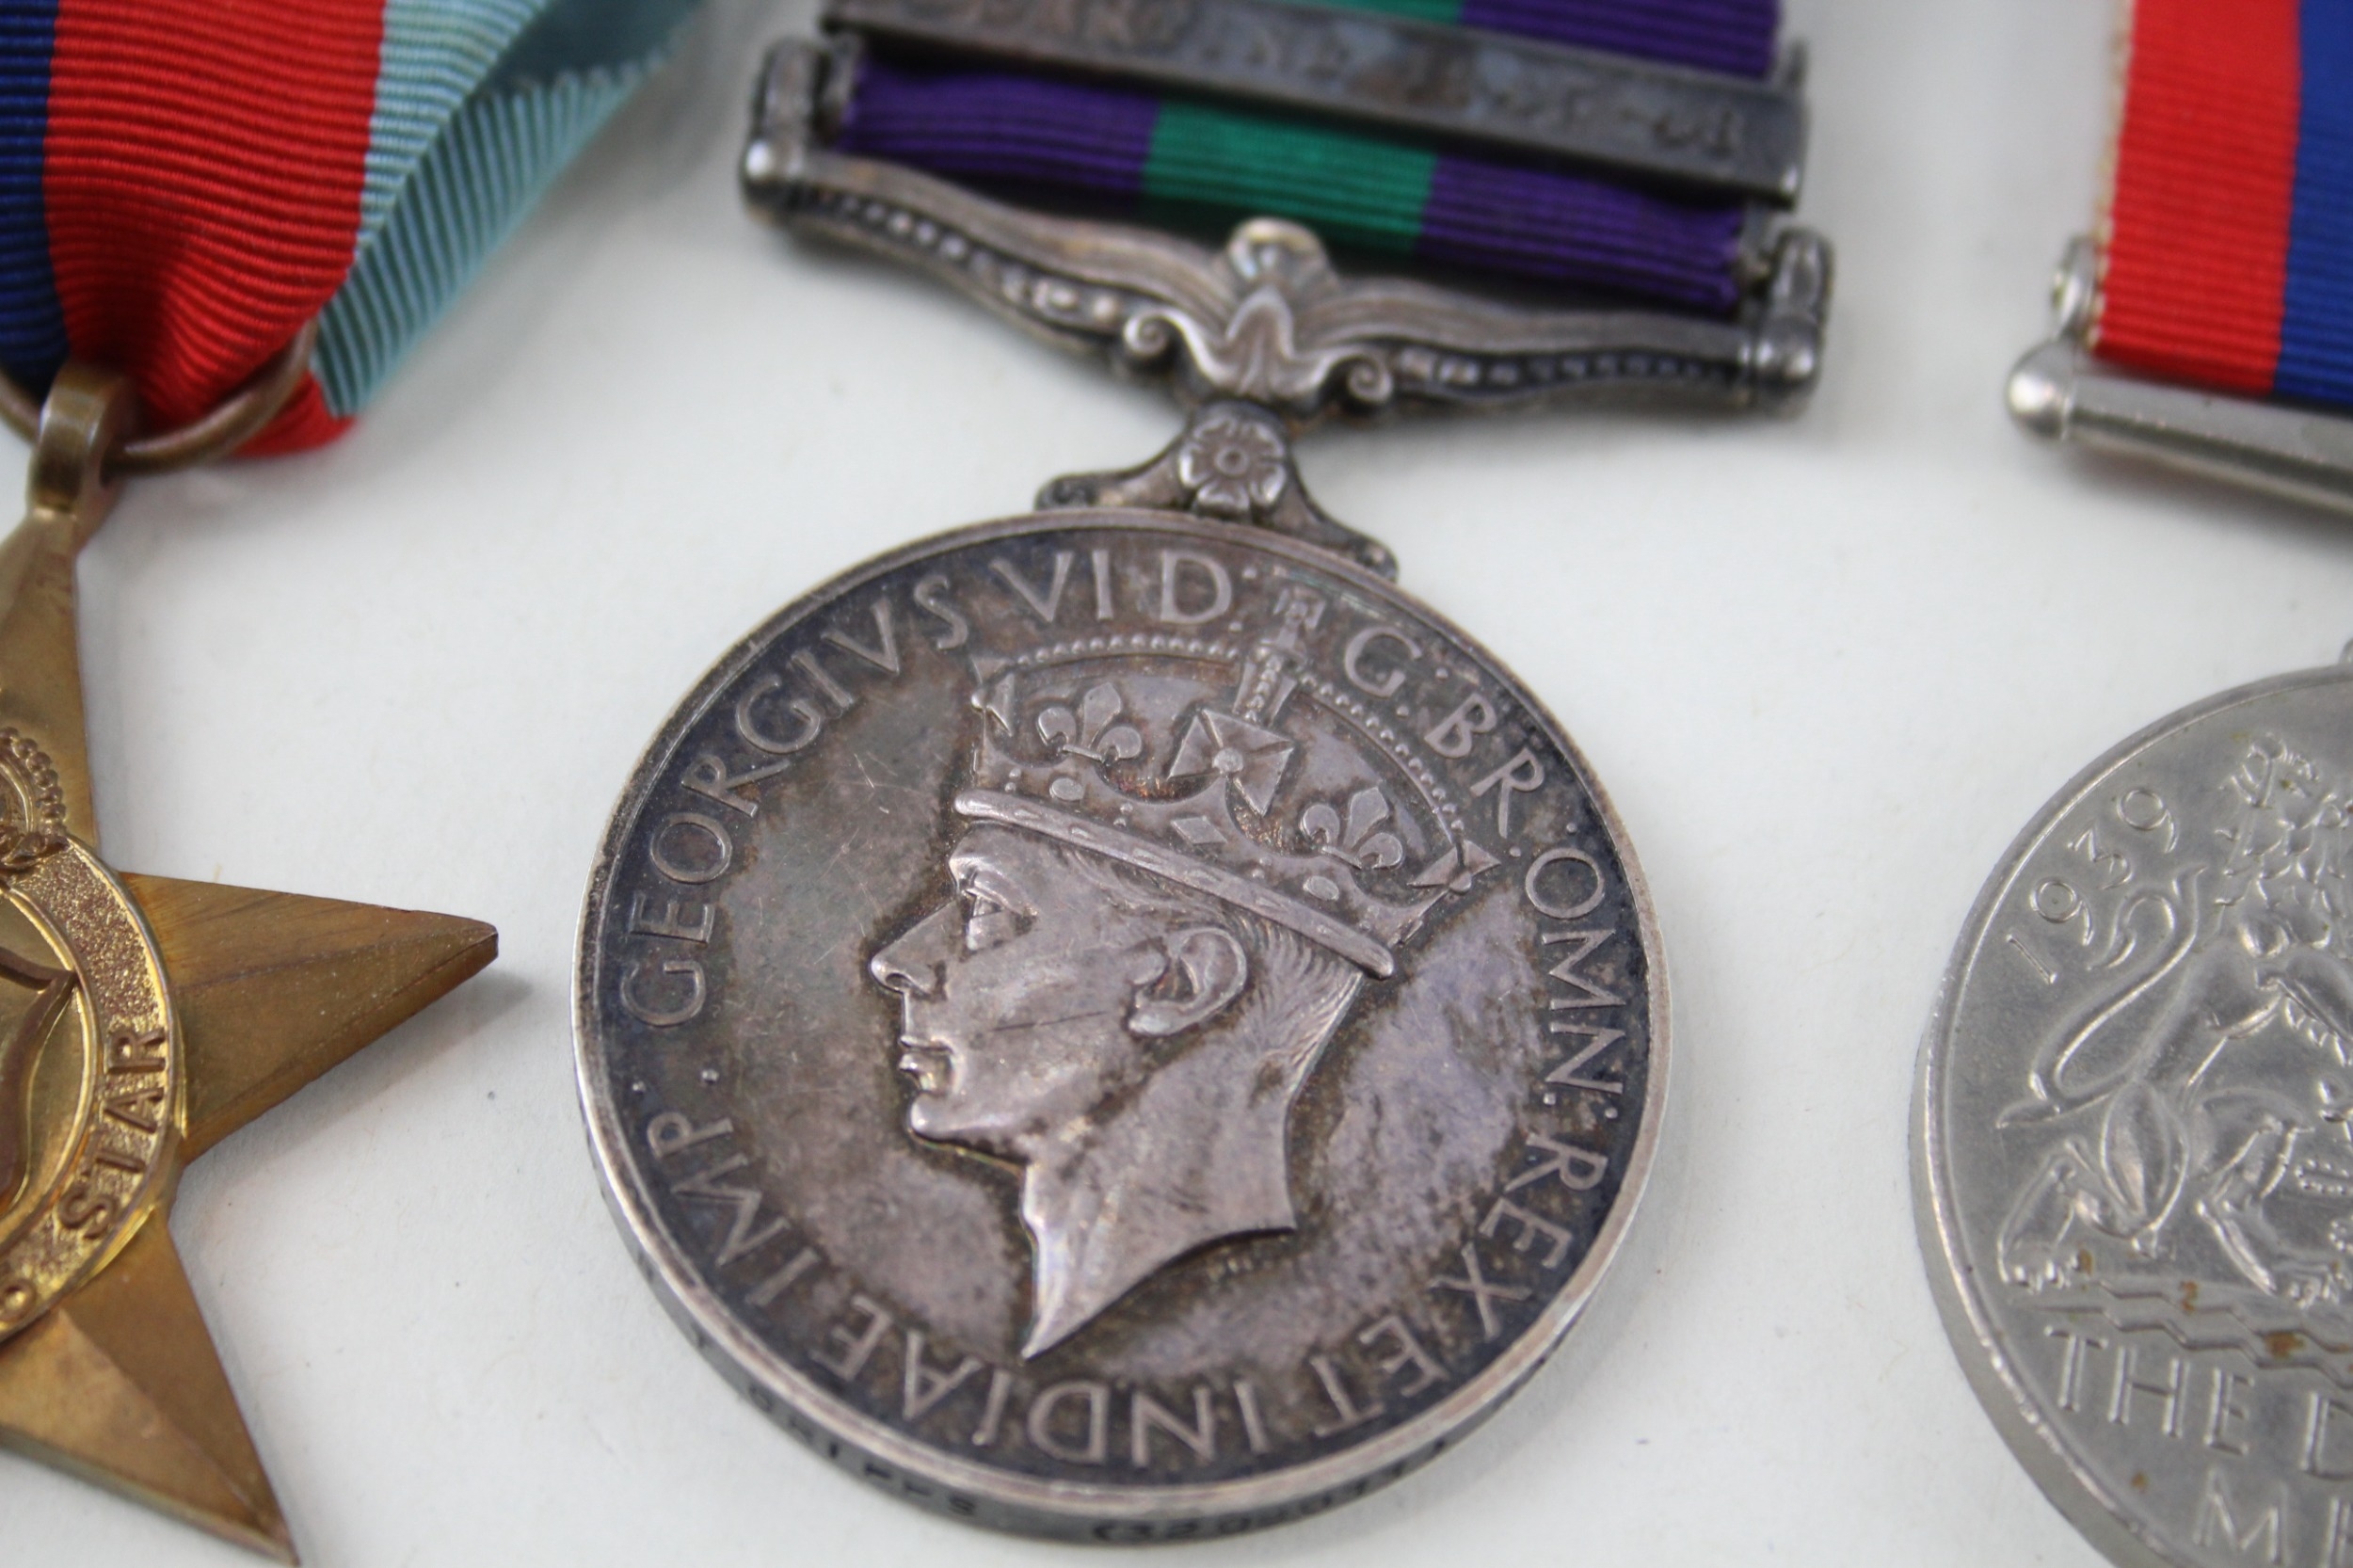 WW2 GV.I G.S.M Palestine 1945-48 Medal Group inc Italy Star - Image 4 of 5